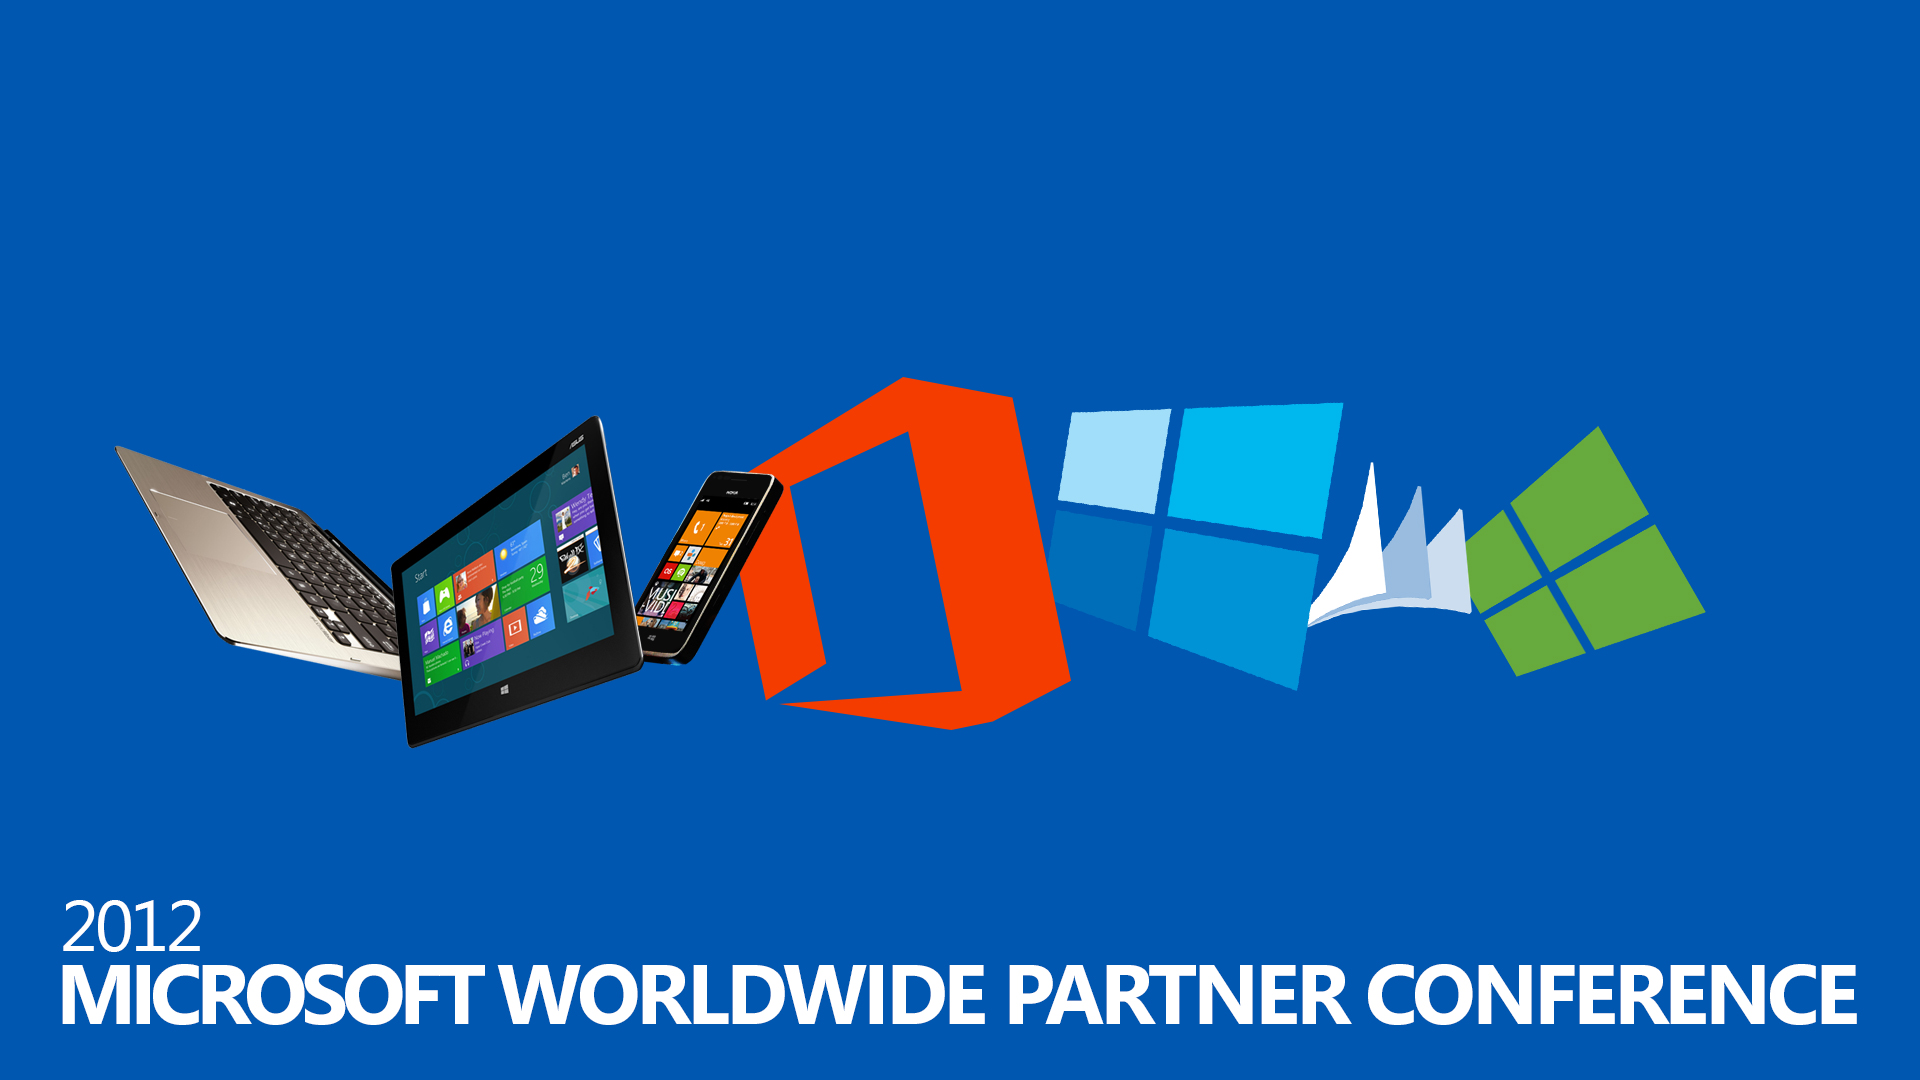 Microsoft Worldwide Partner Conference Wallpaper By Metroui On